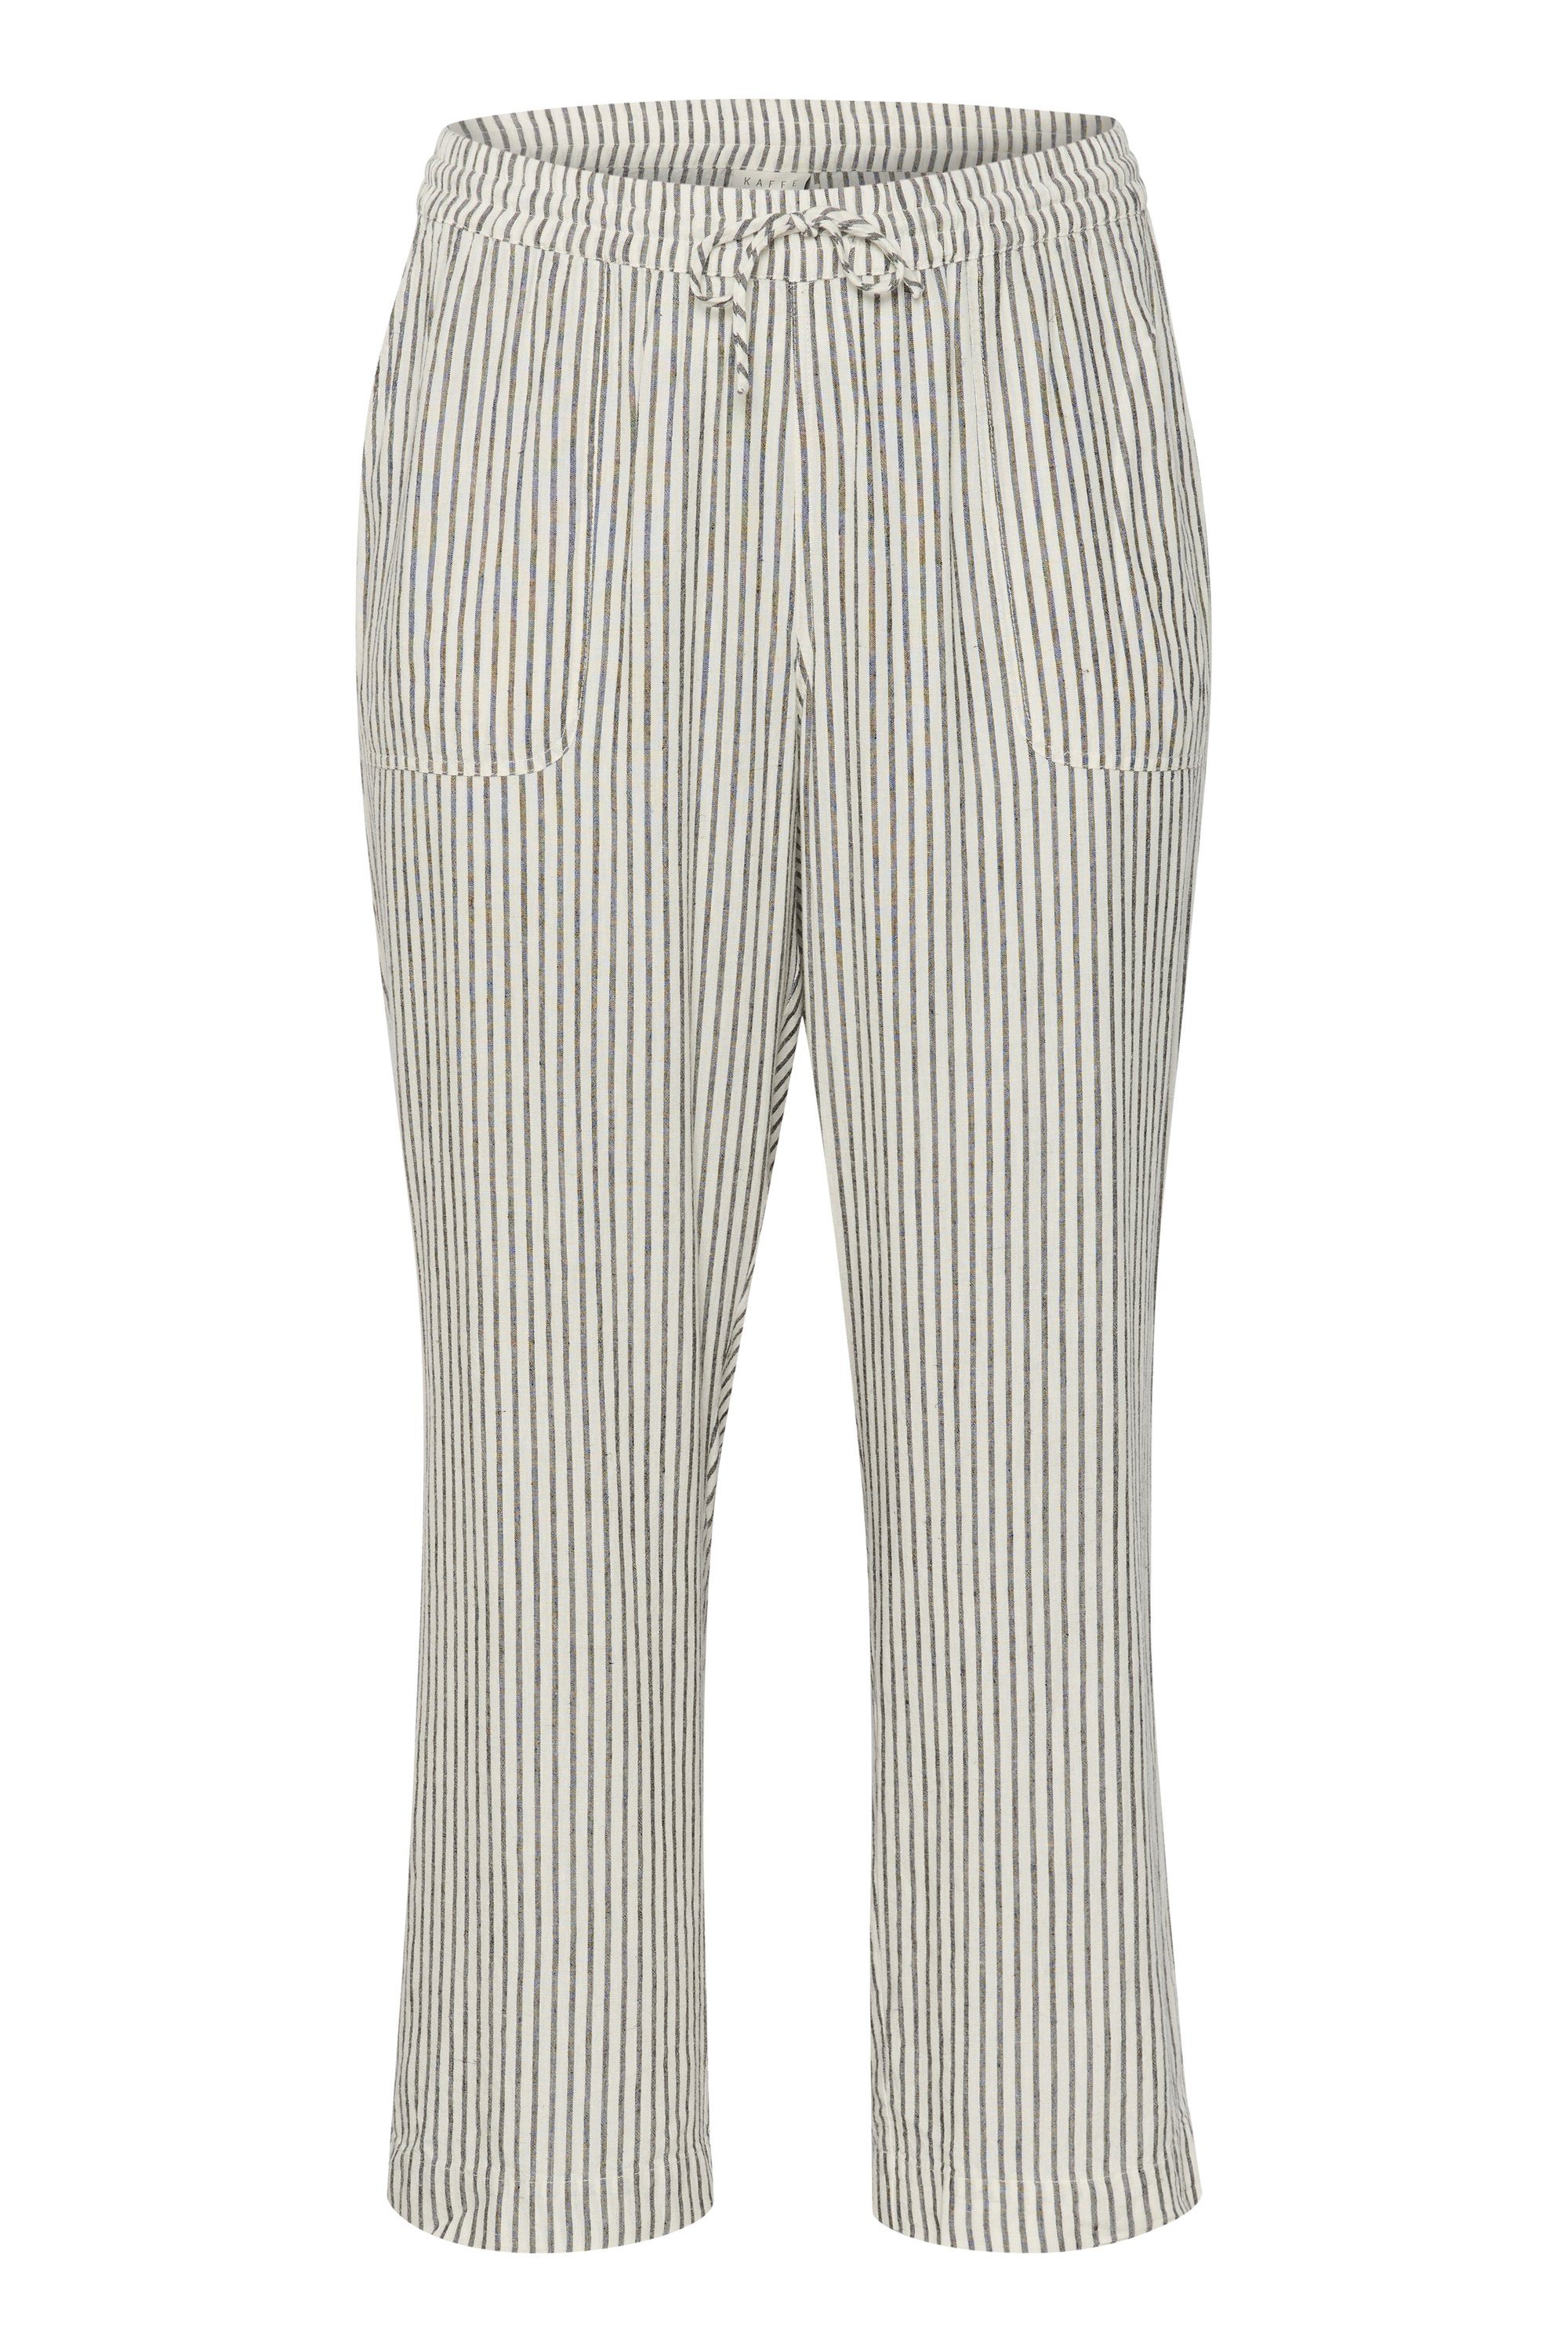 KAFFE Curve Anzughose Pants Suiting KCmille Große Größen